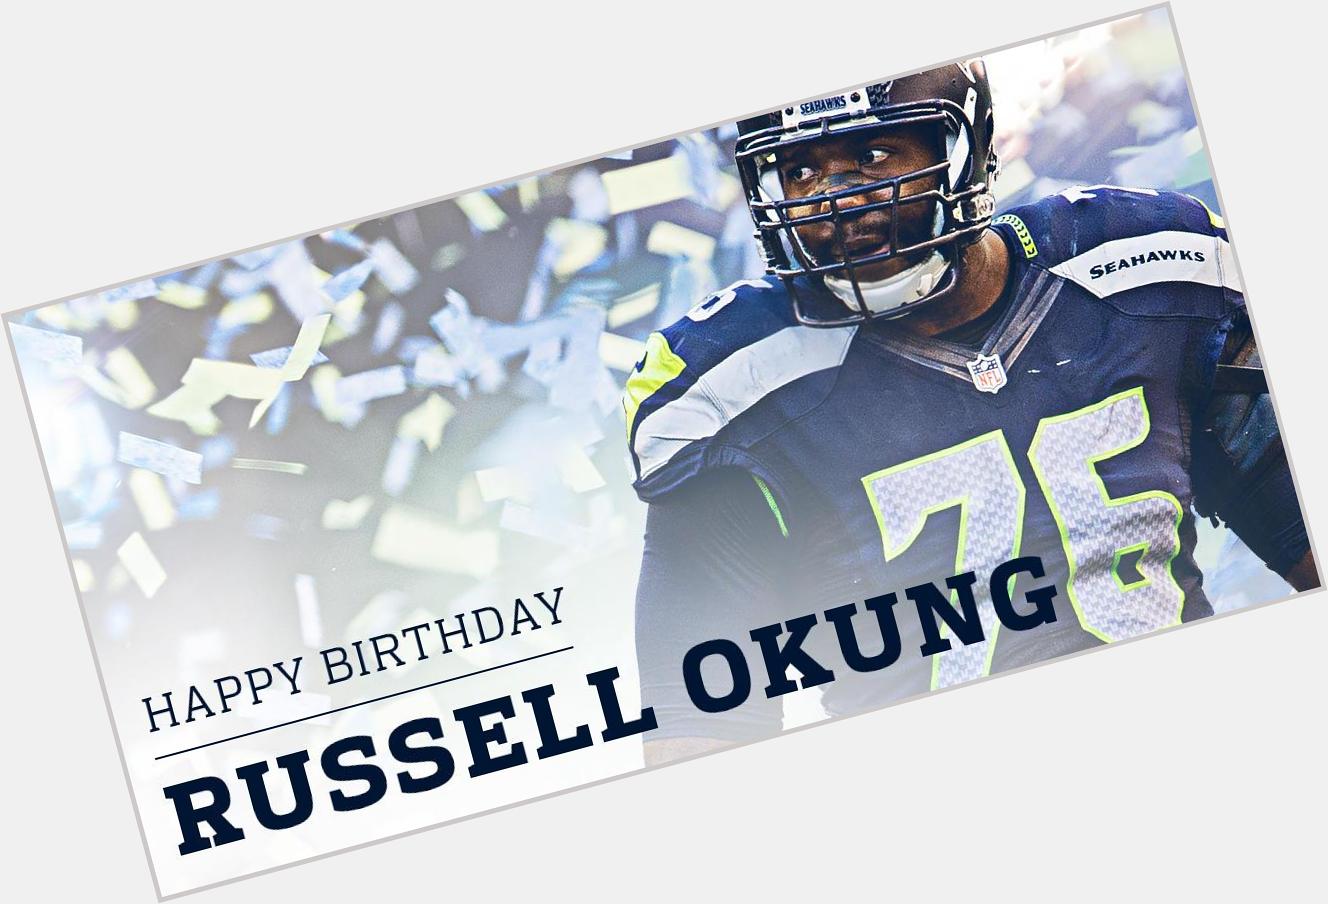 ¦ Happy Birthday, Seahawks LT Russell Okung  